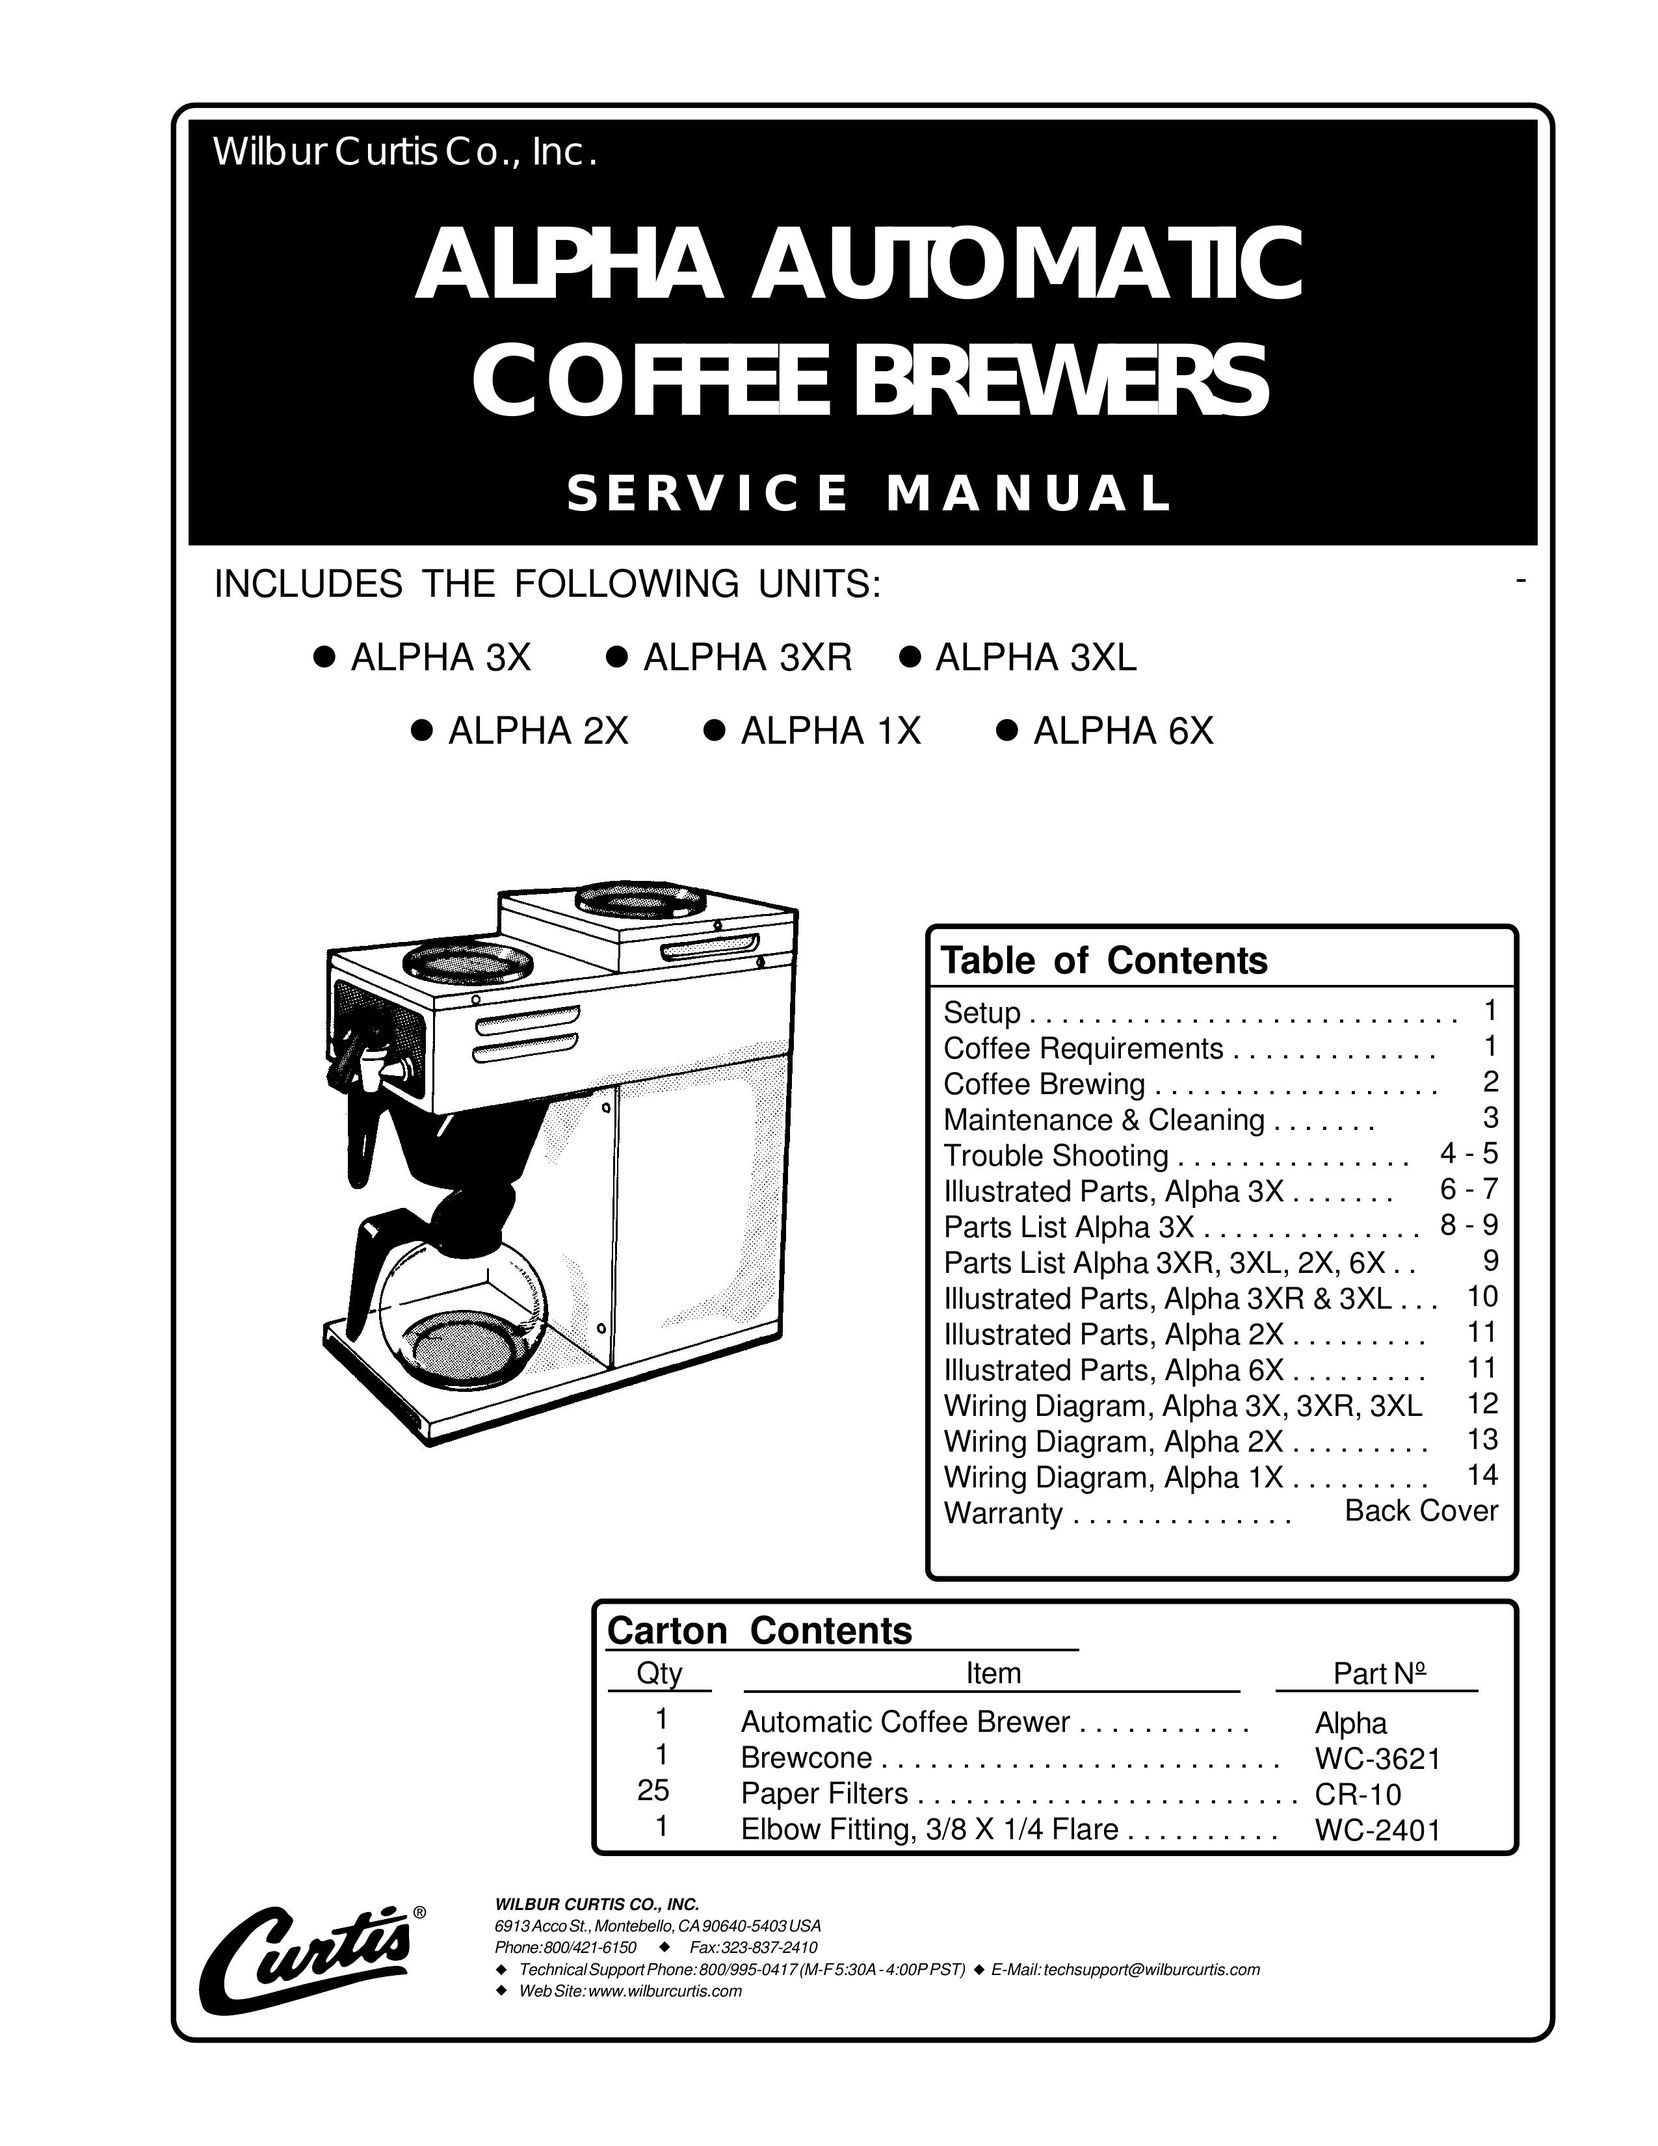 Wibur Curtis Company ALPHA 6X Coffeemaker User Manual